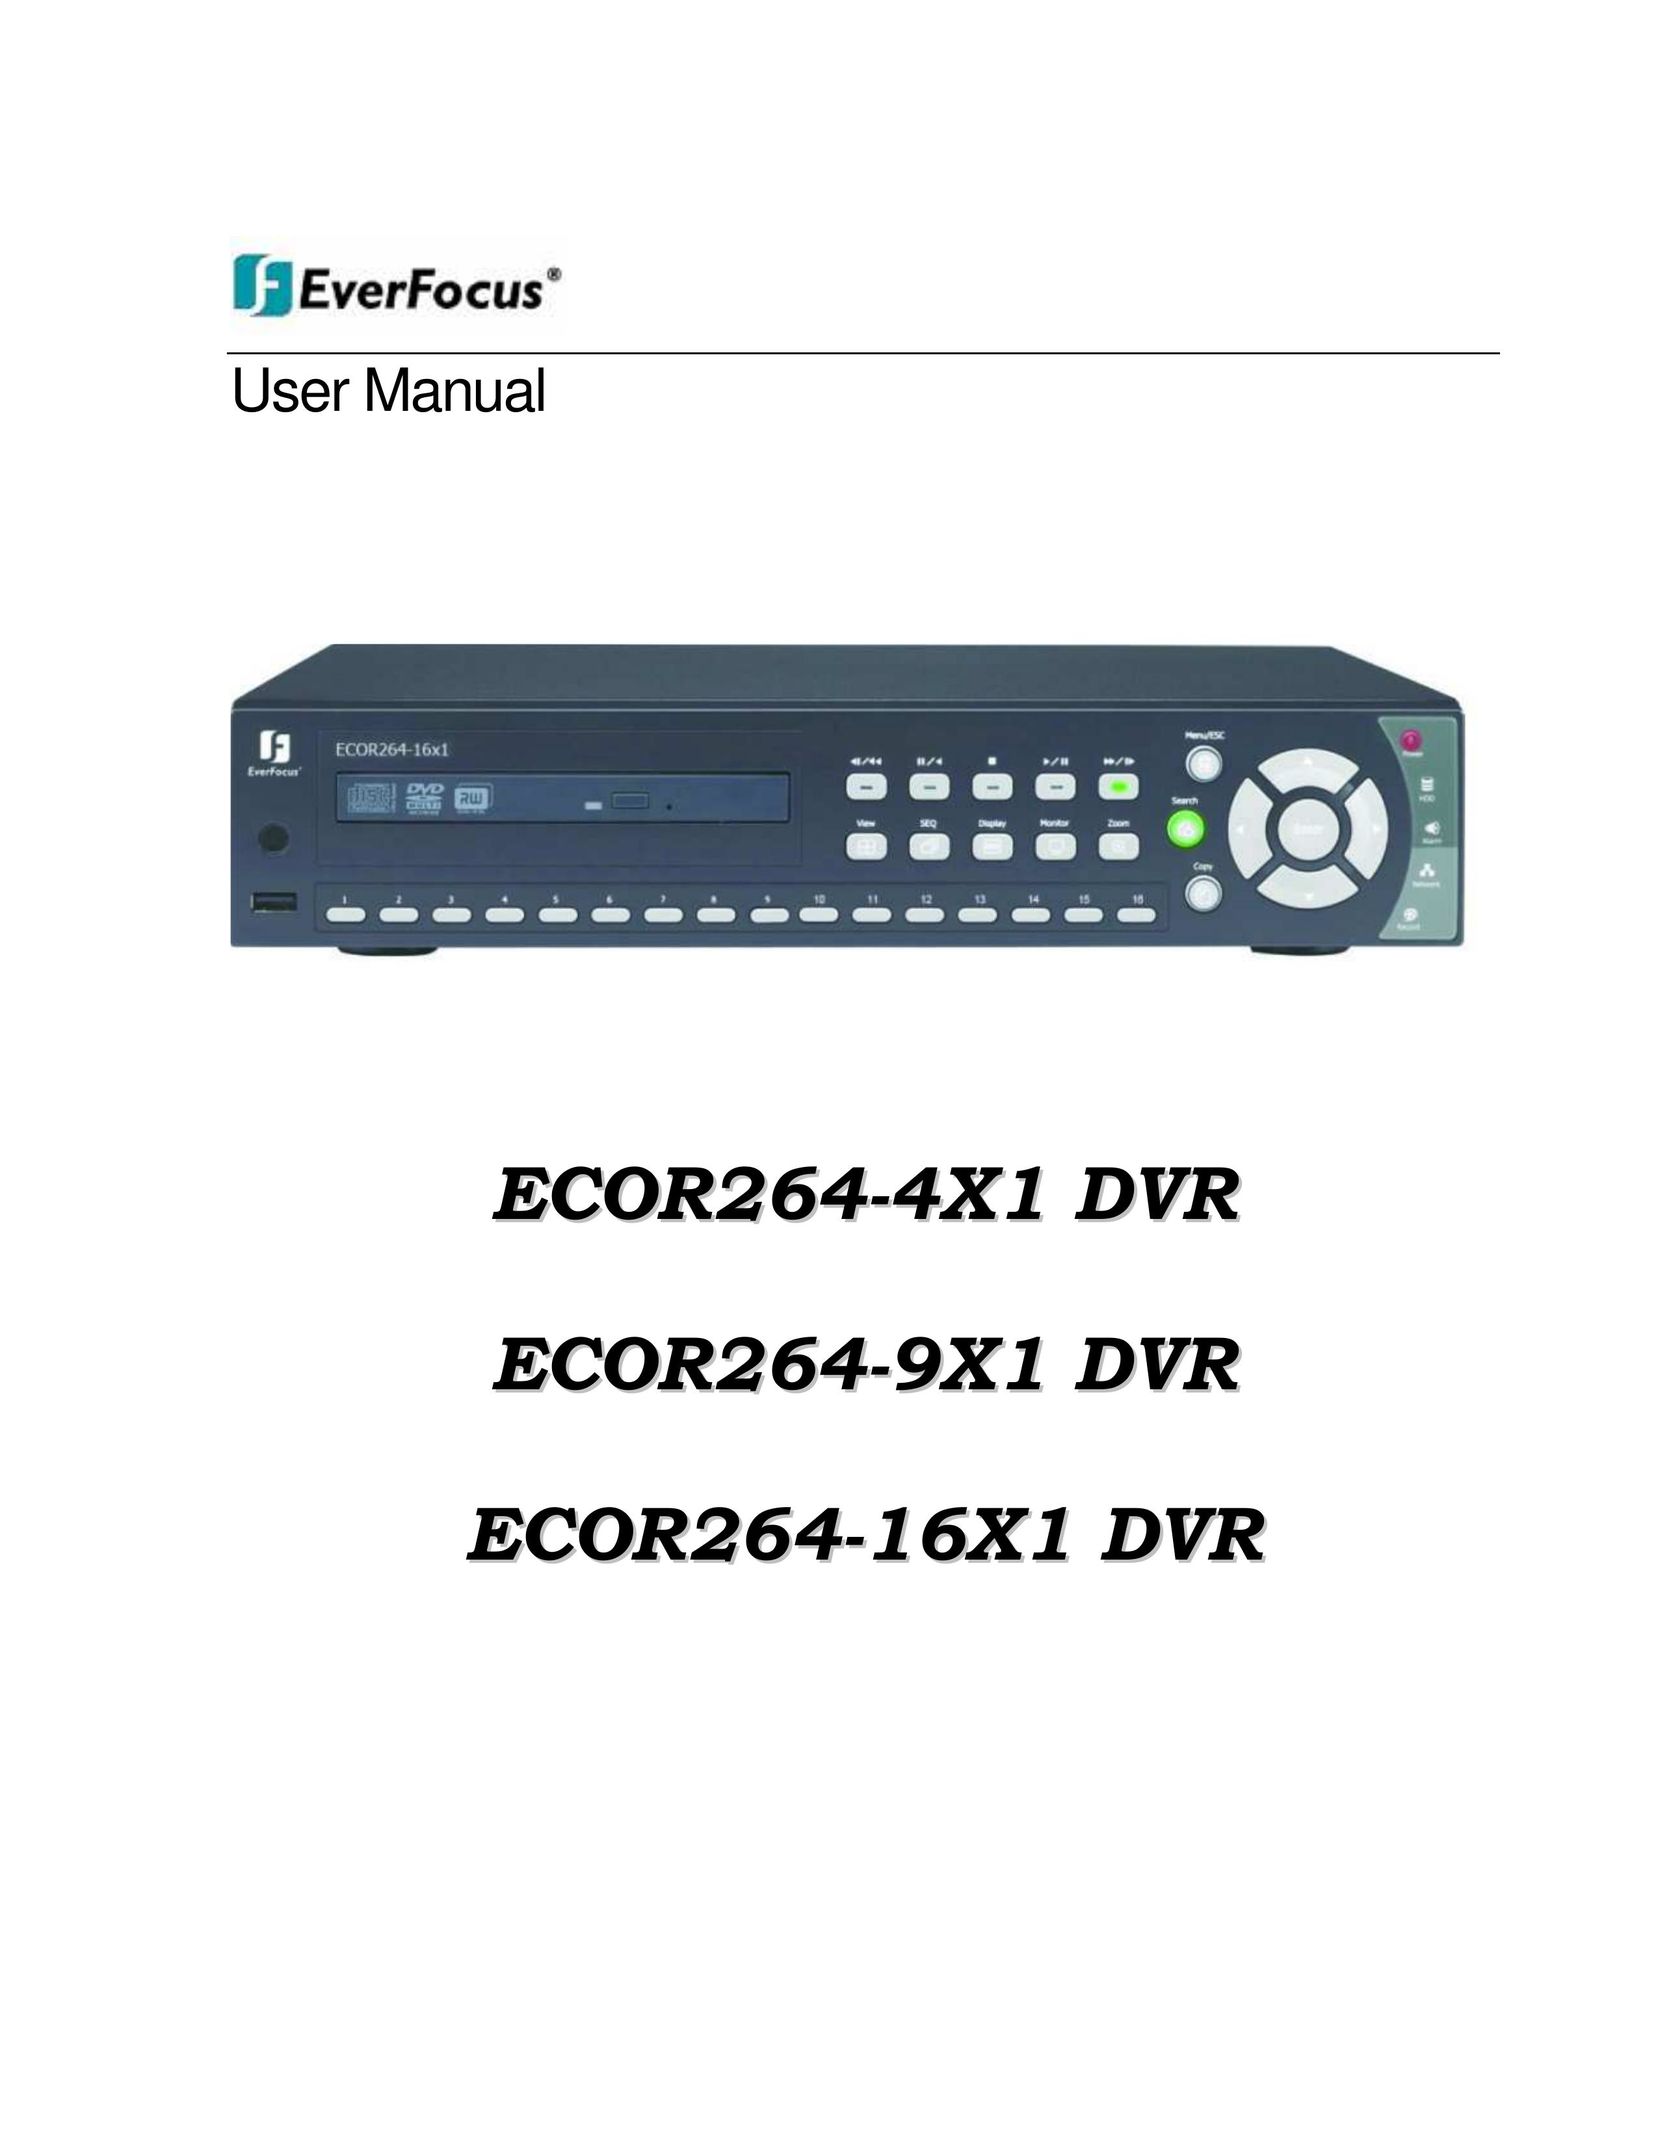 EverFocus ECOR264-16X1 DVR User Manual